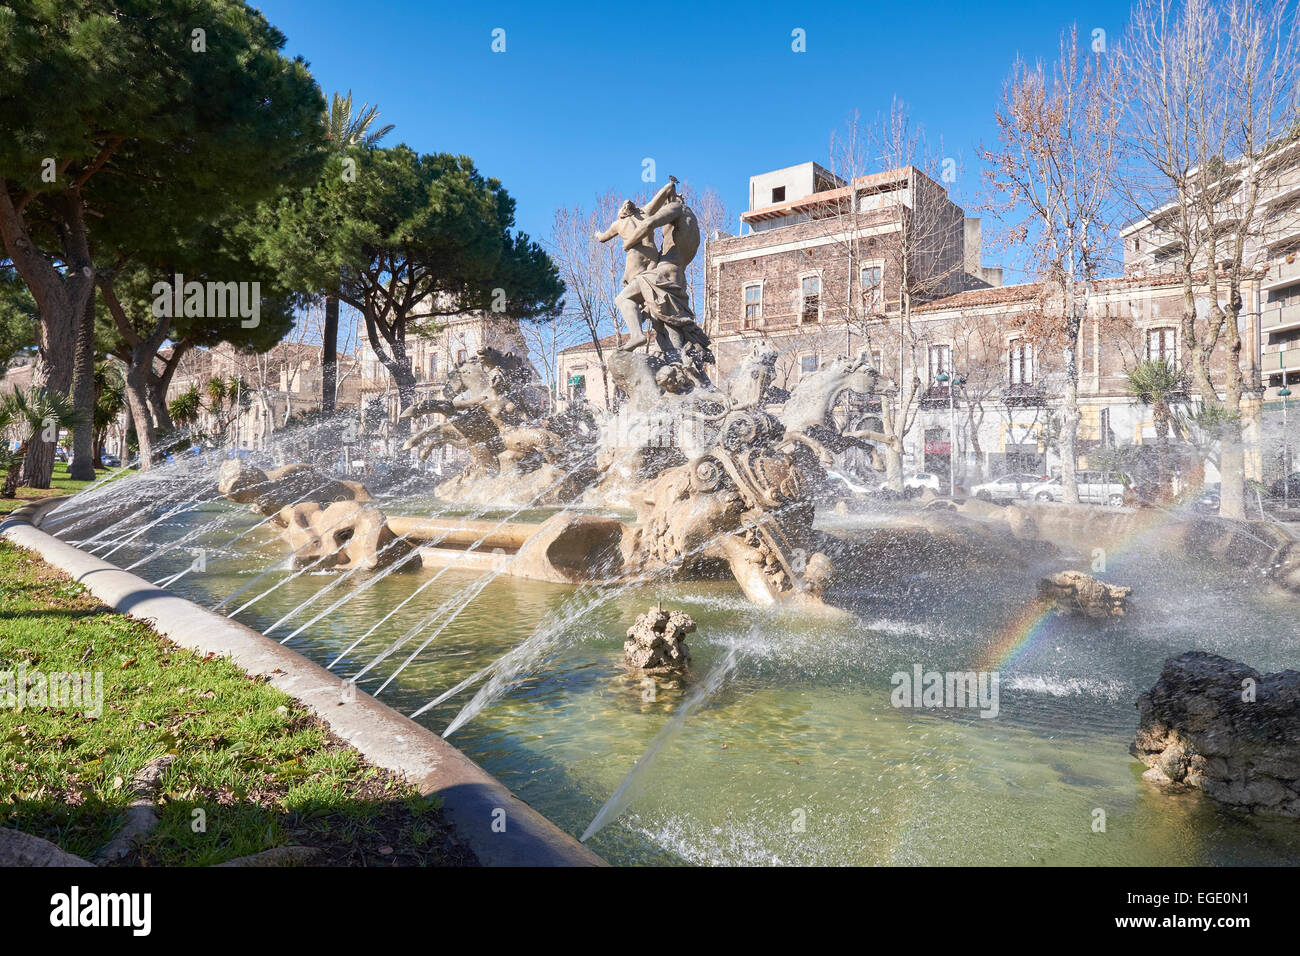 Decorative baroque fountain, Street scene in Catania, Sicily, Italy. Italian Tourism, Travel and Holiday Destination. Stock Photo